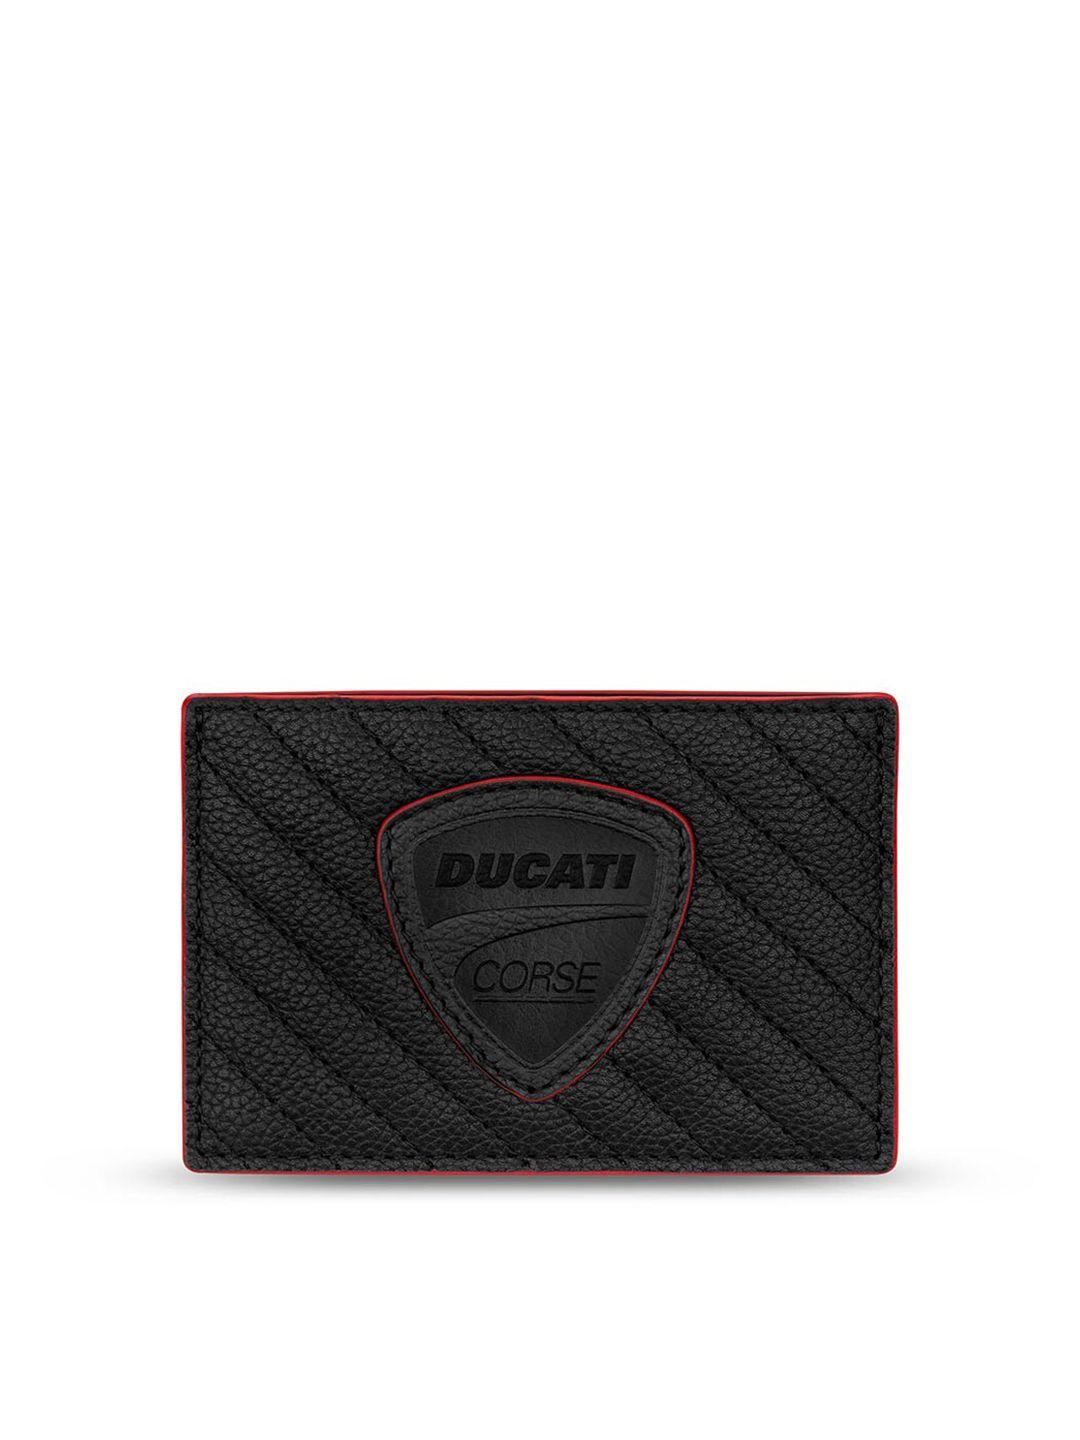 ducati corse men textured leather card holder